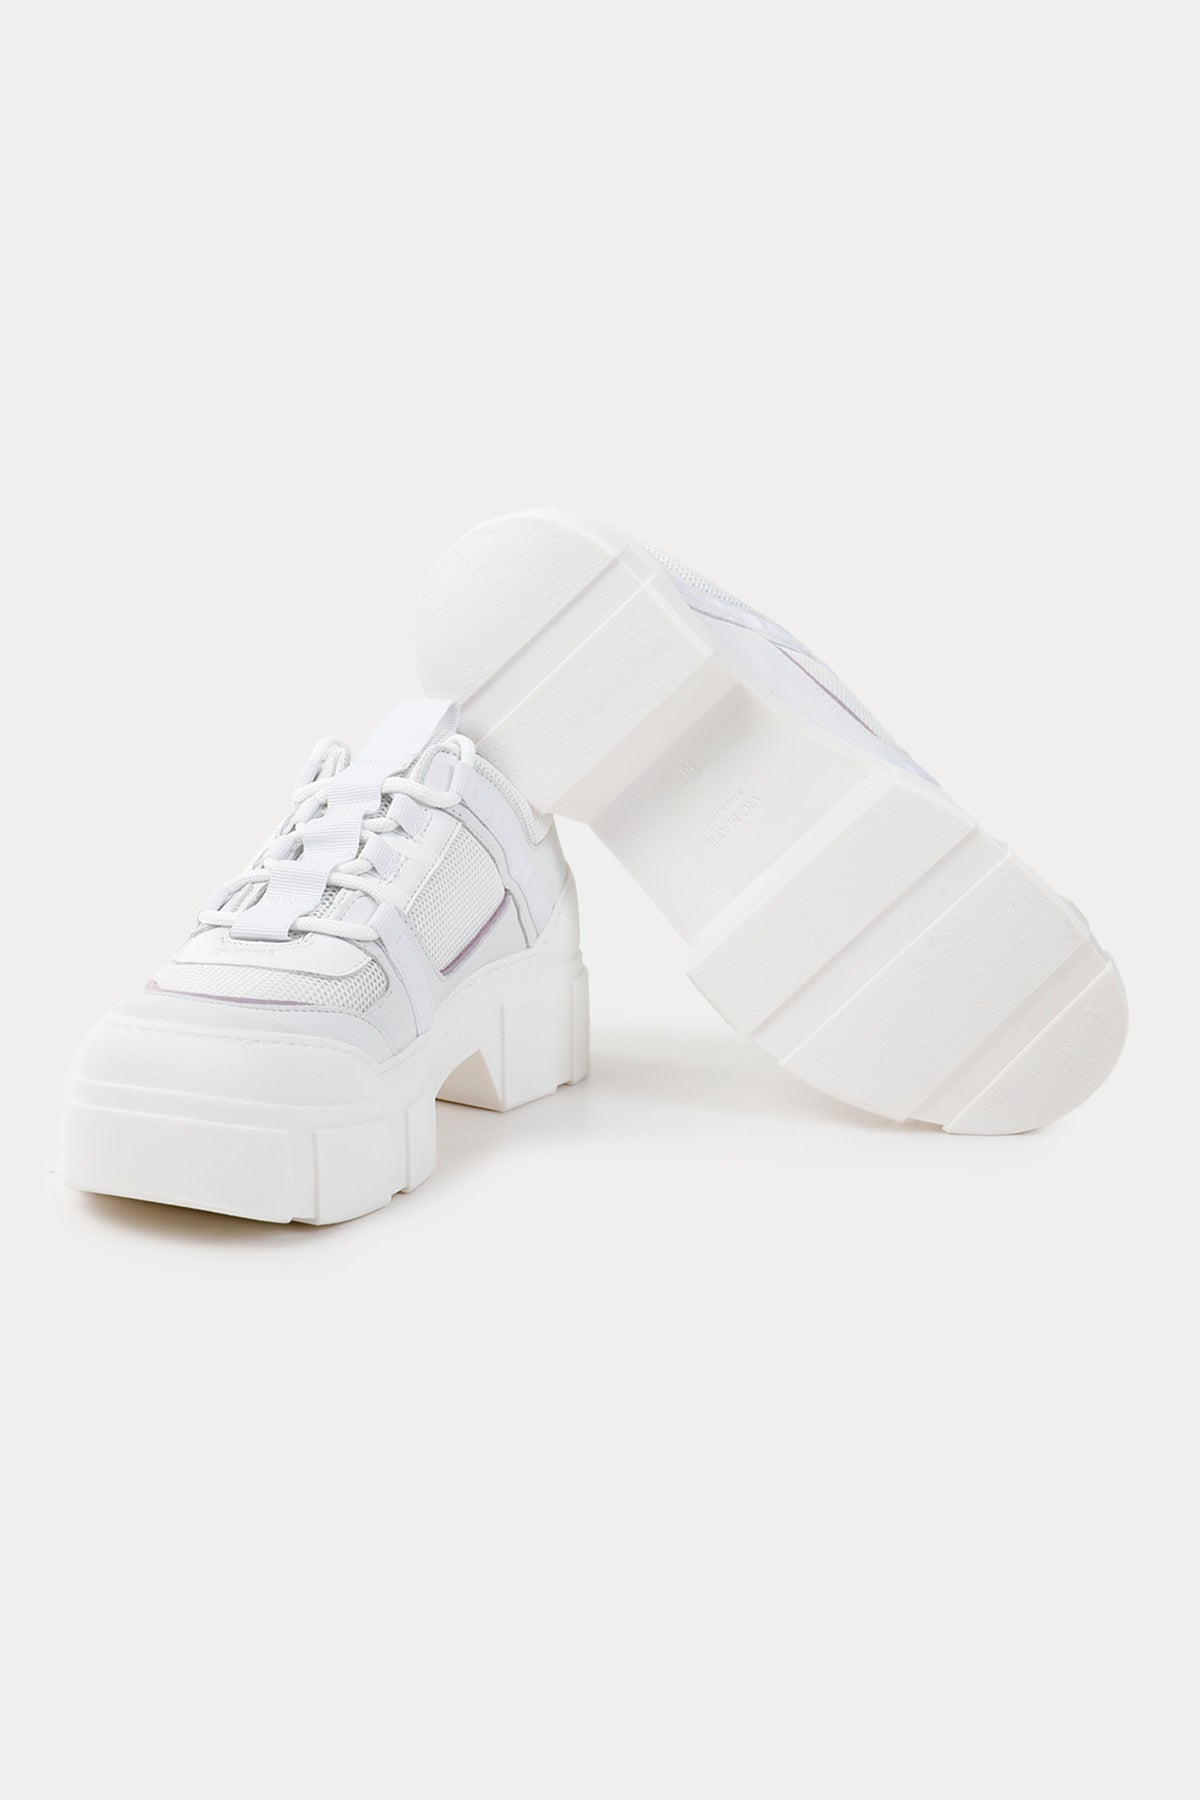 Vic Matie Fileli Deri Sneaker Ayakkabı